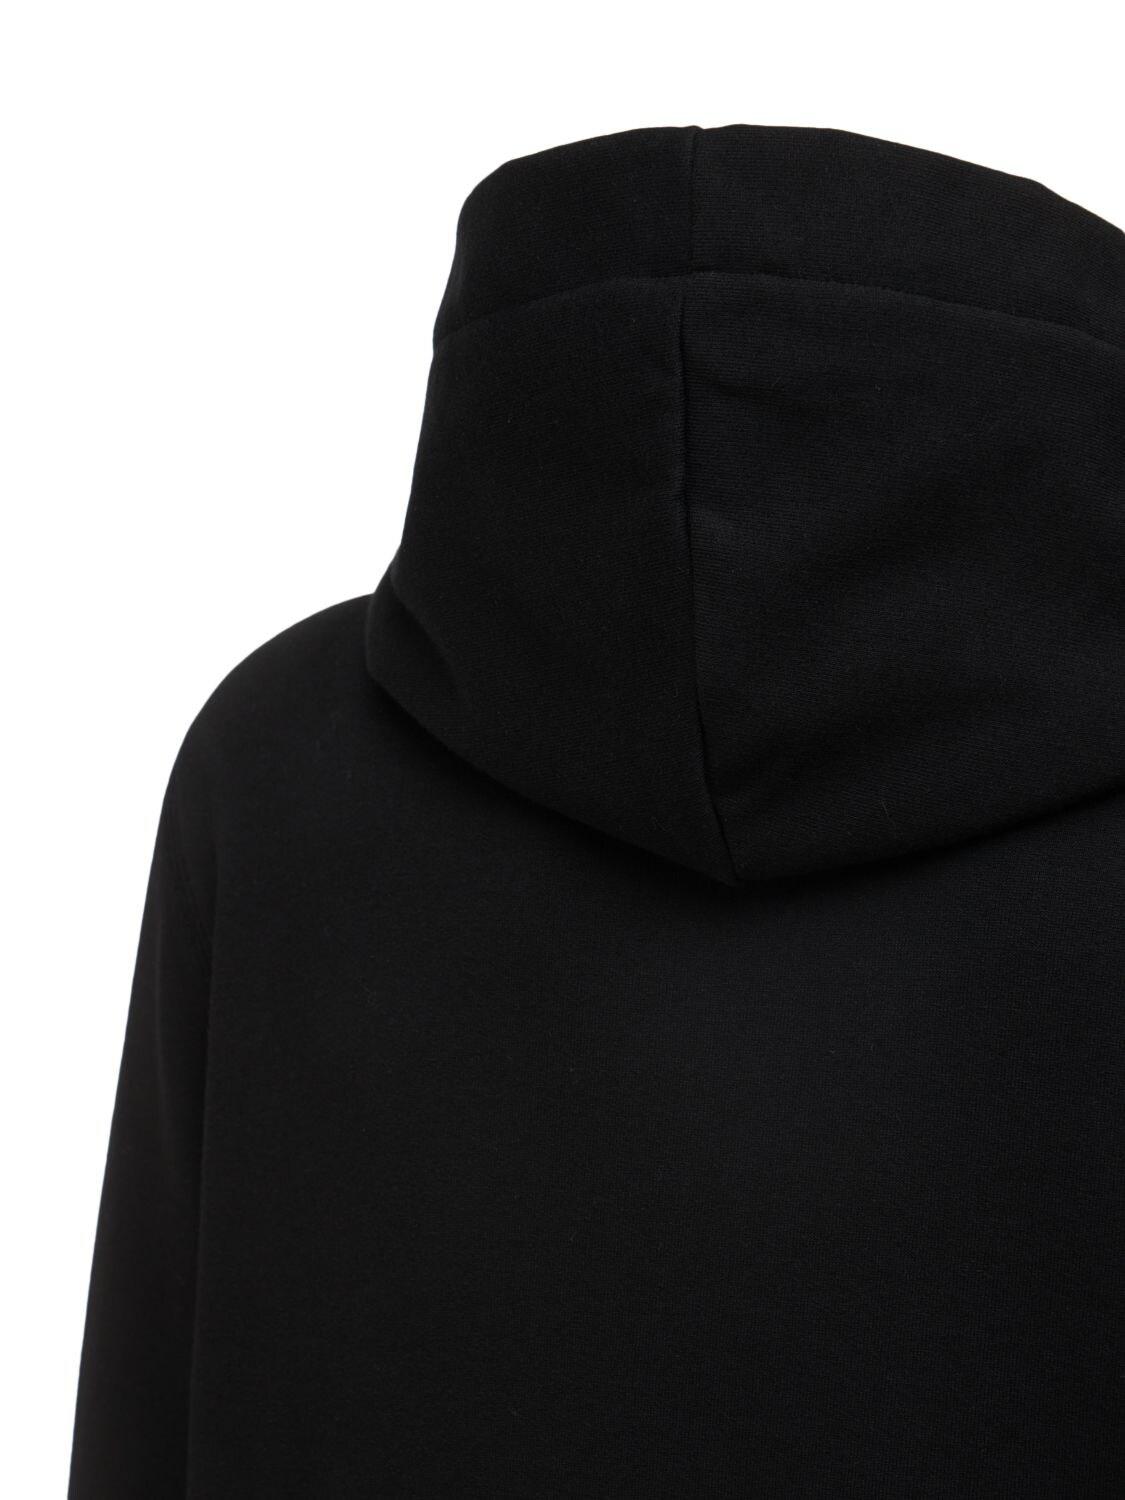 Lanvin Logo Embroidery Cotton Jersey Zip Hoodie in Black for Men 